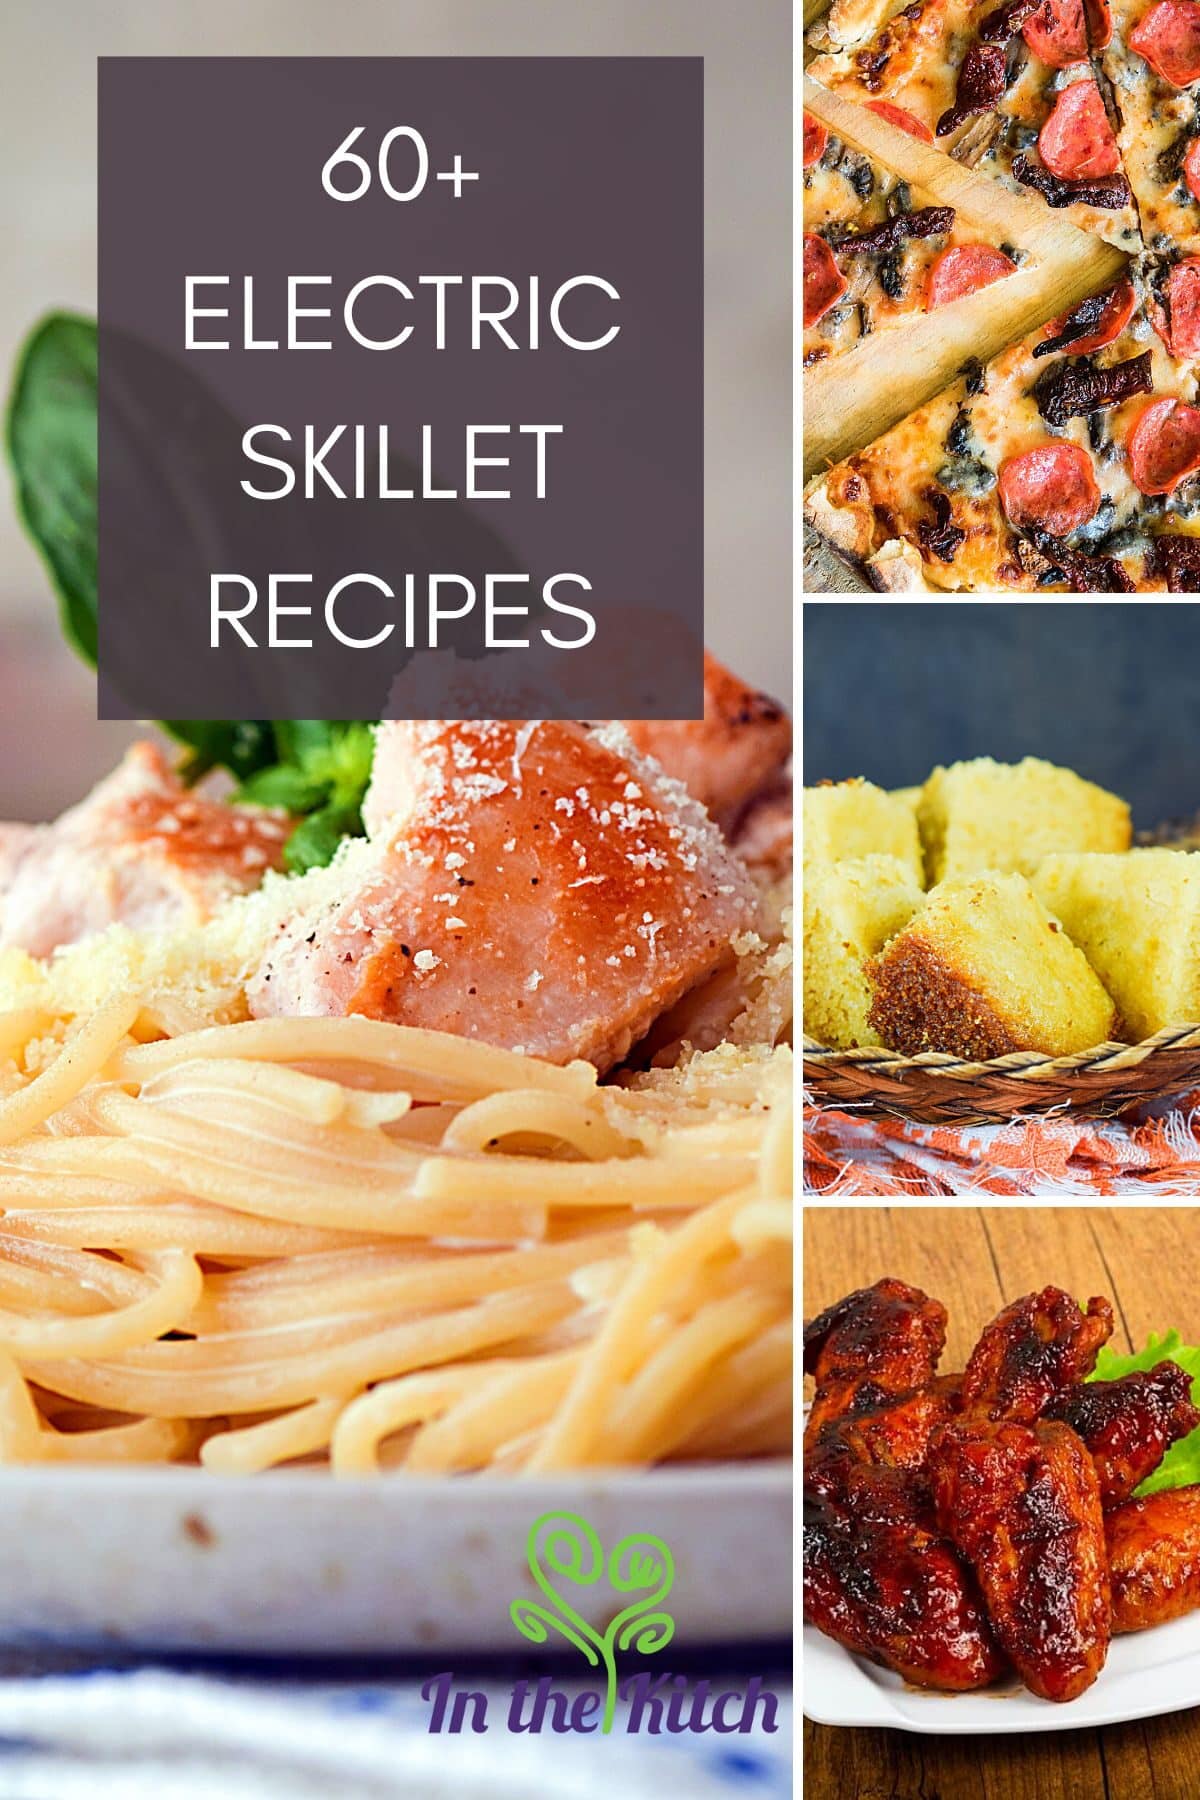 56 Dash electric family skillet recipes ideas